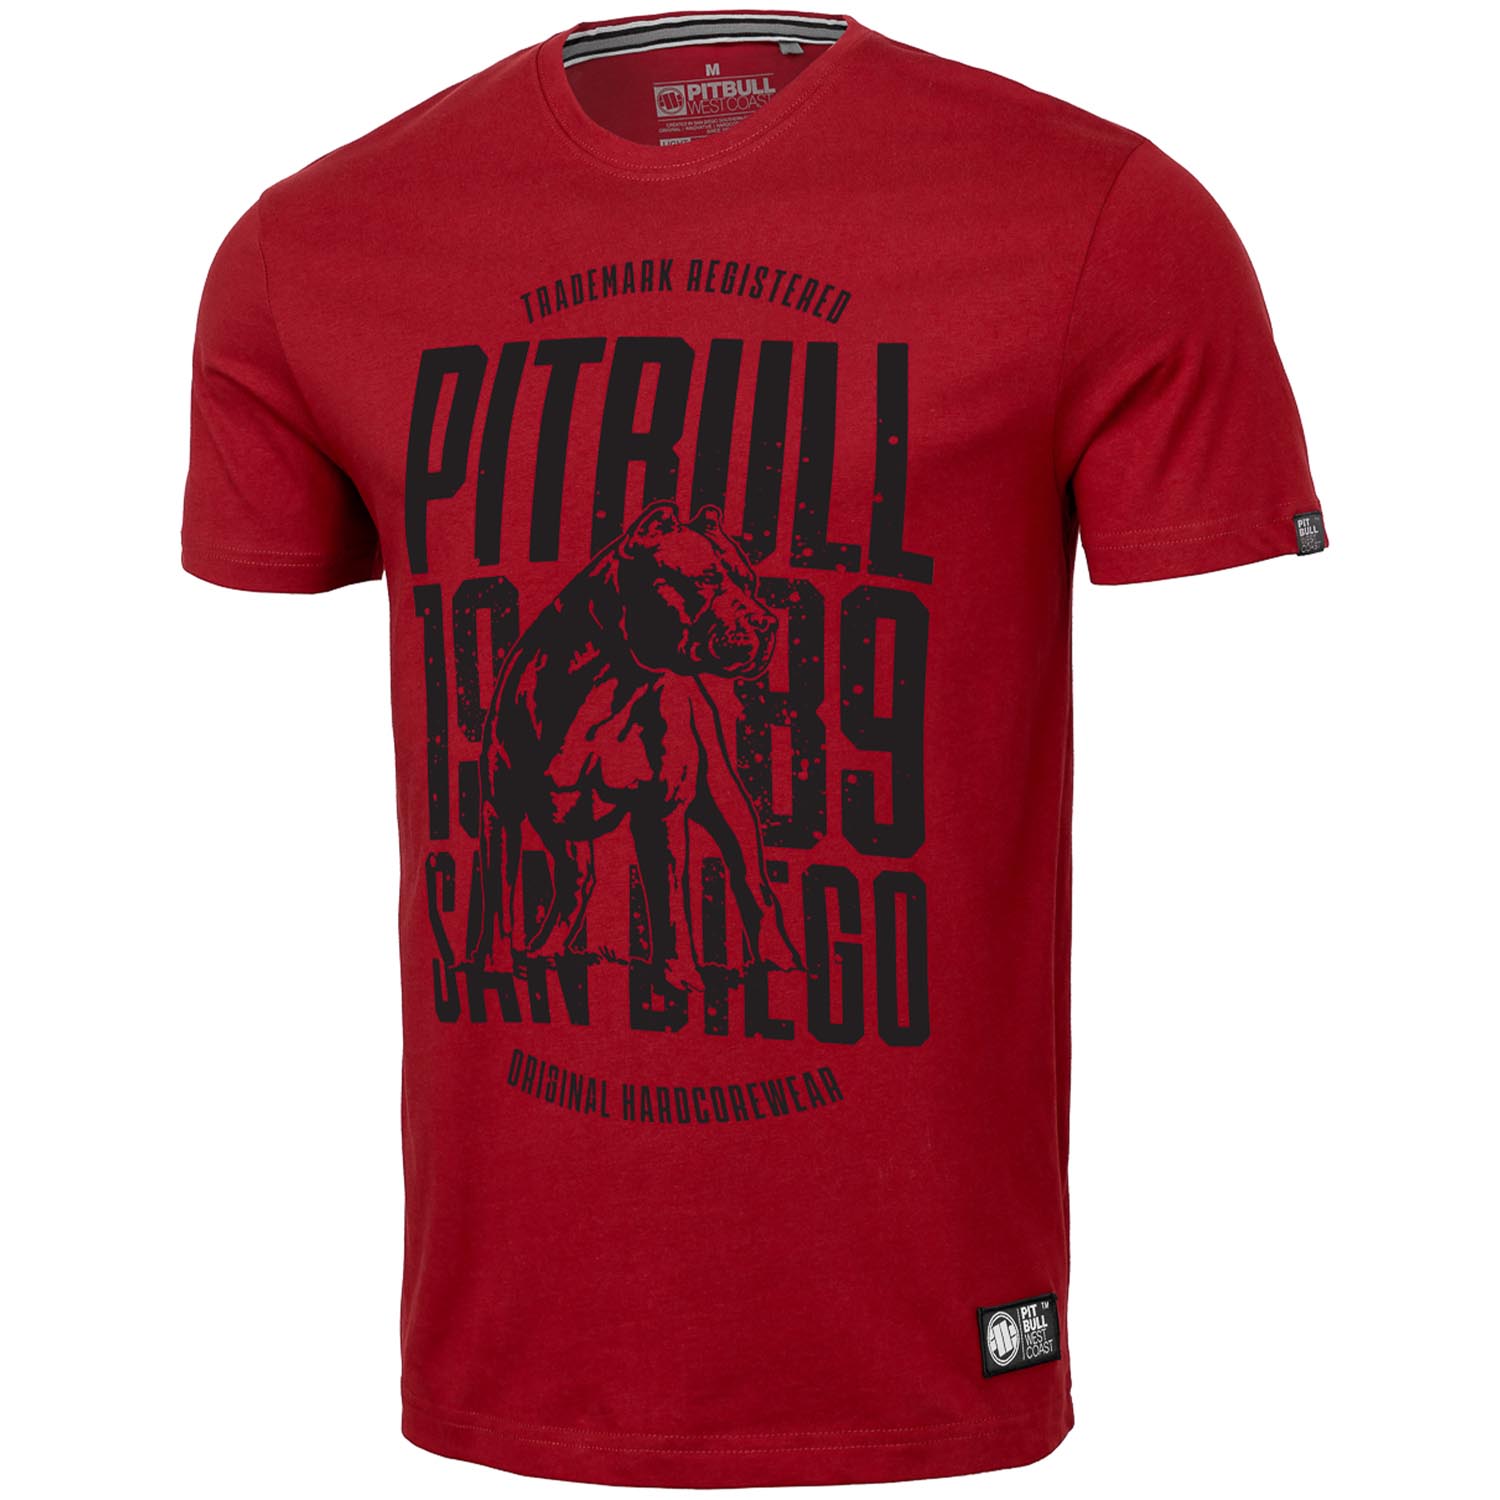 Pit Bull West Coast T-Shirt, San Diego Dog, red